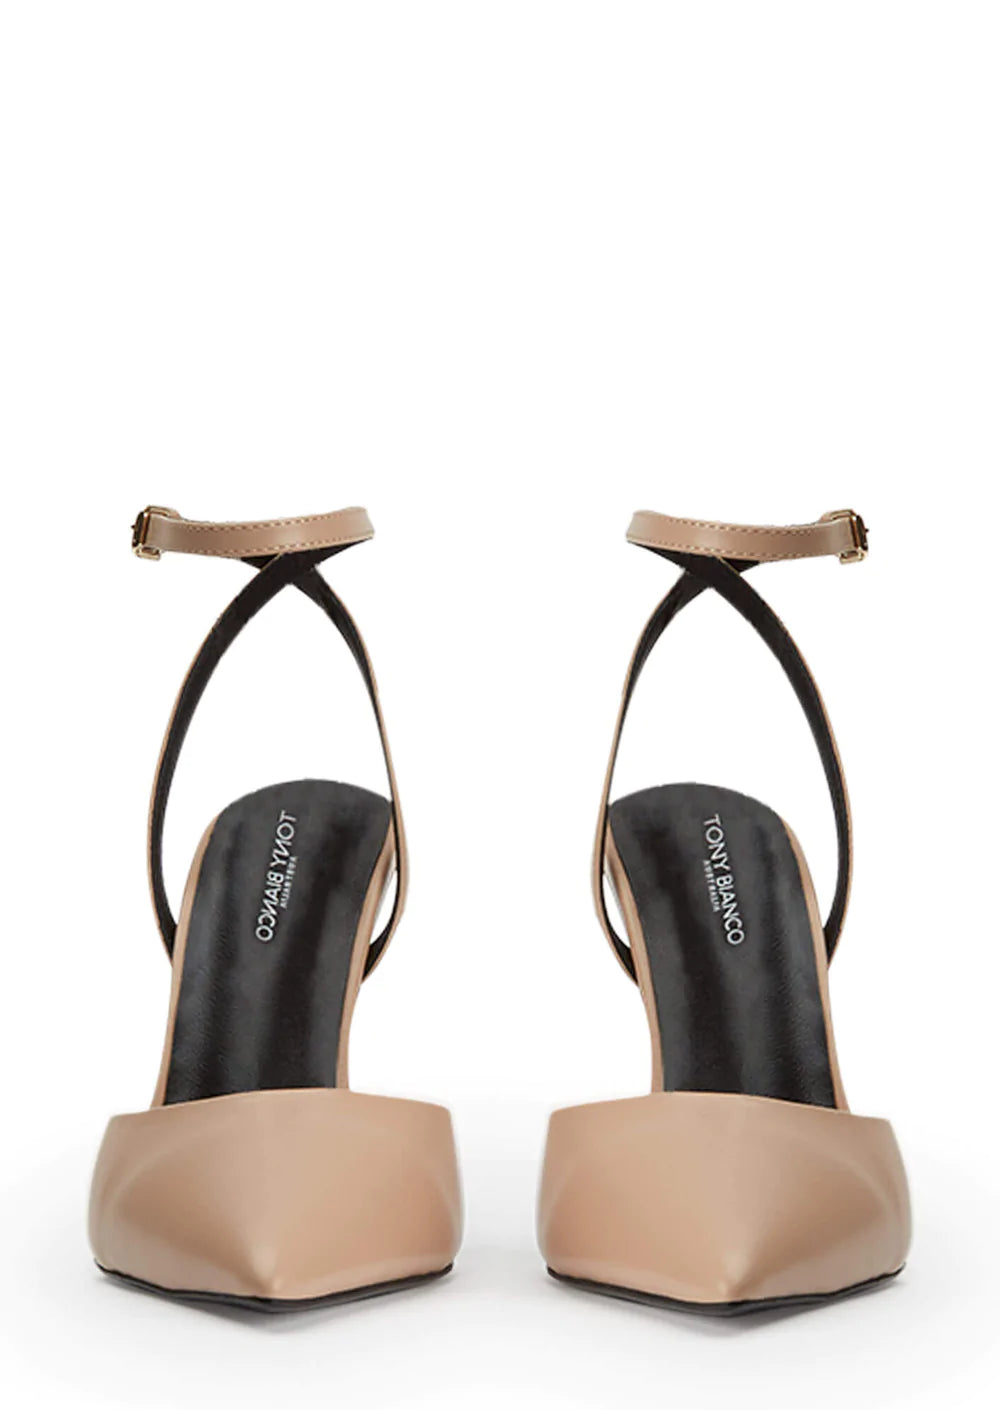 AVALON PUMP - TONY BIANCO - 10, 5, 6, 6.5, 7, 7.5, 8.5, 9, BLACK, on sale, pump on sale, SKIN, womens footwear - Stomp Shoes Darwin